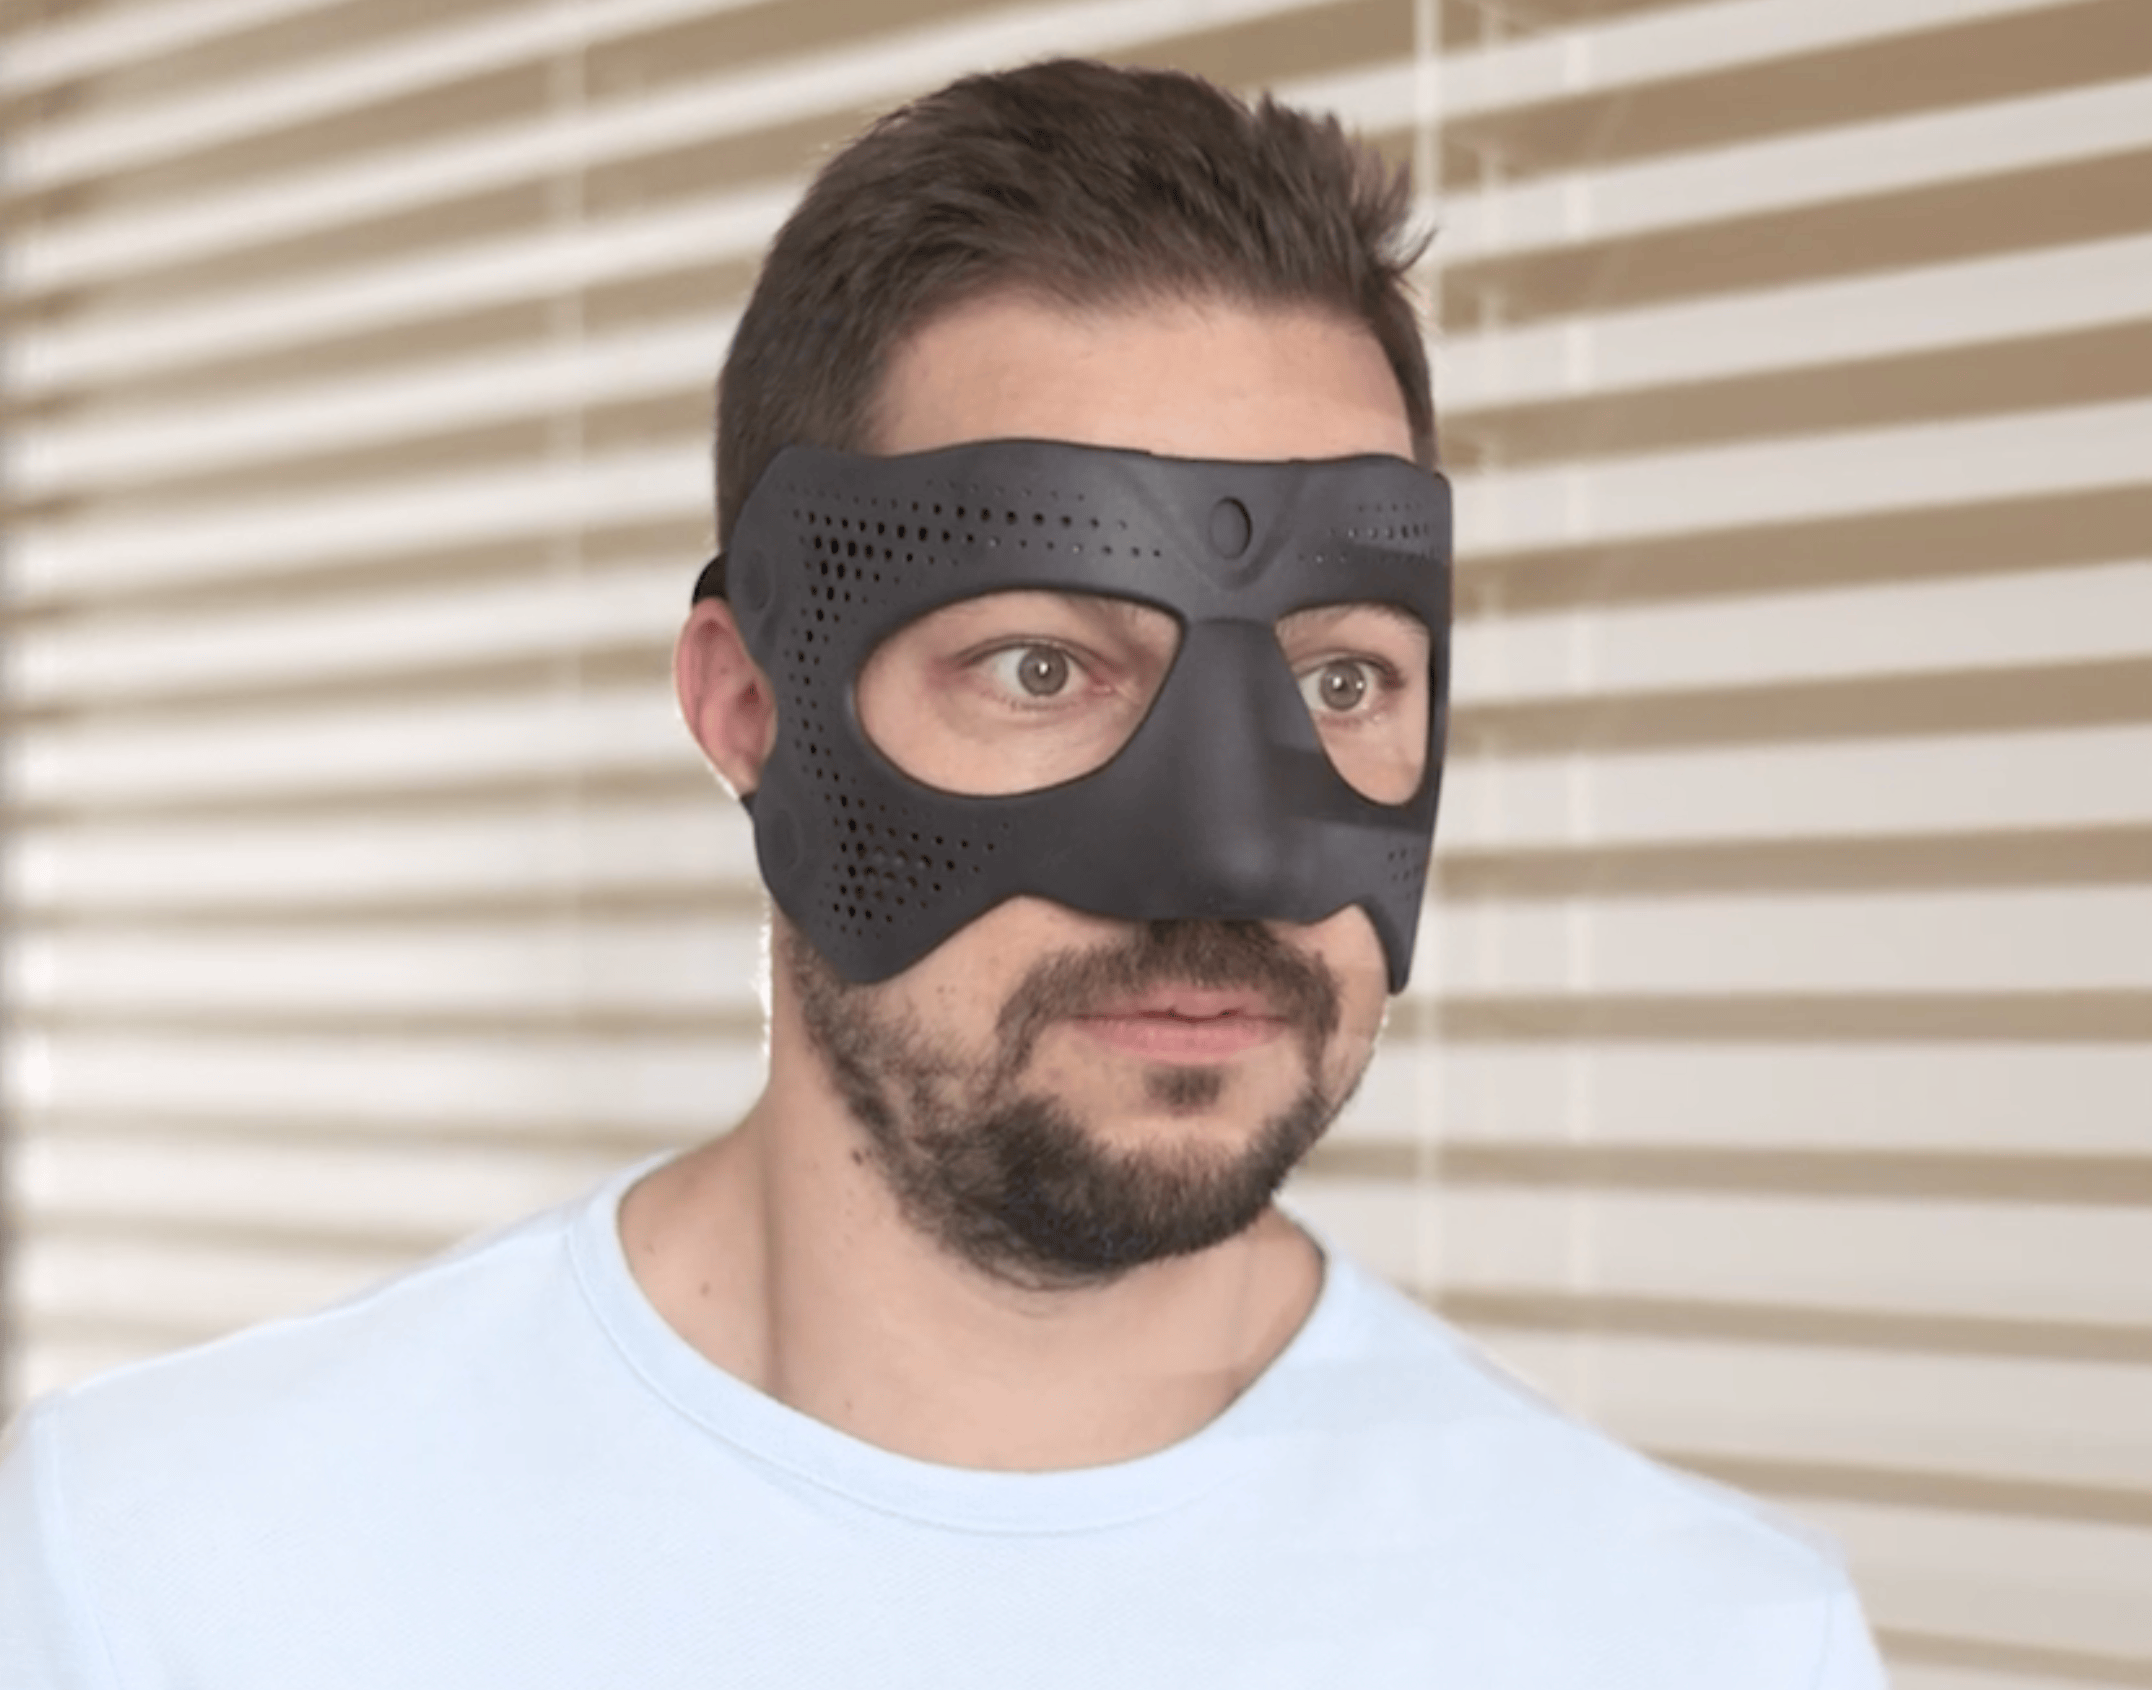 Nose Guard Face Shield For Broken Nose, Sports Medicine Face Guard